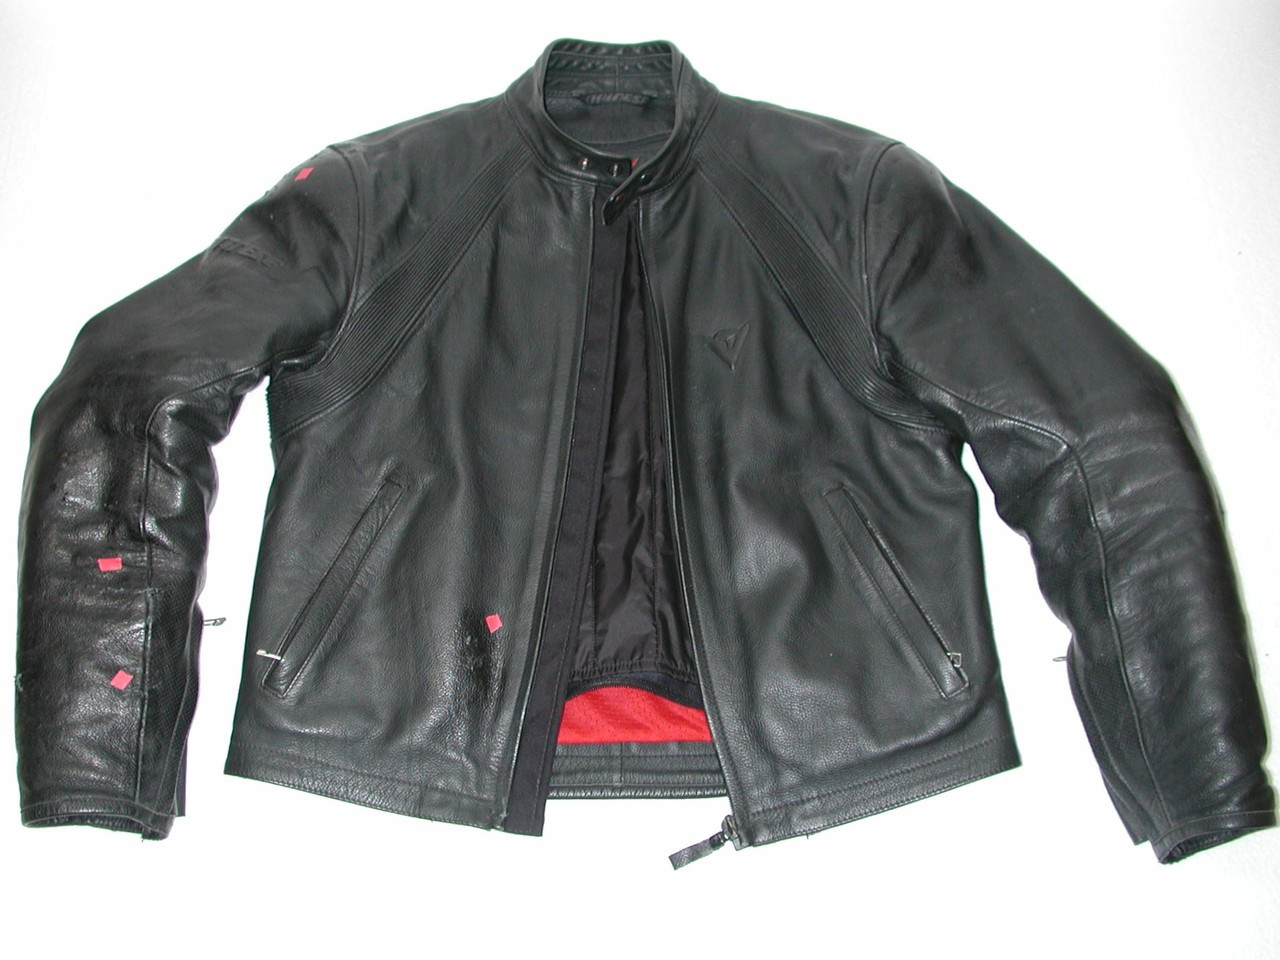 DAINESE Men's Black leather Armor Motorcycle cafe Racer biker Jacket Size:42US